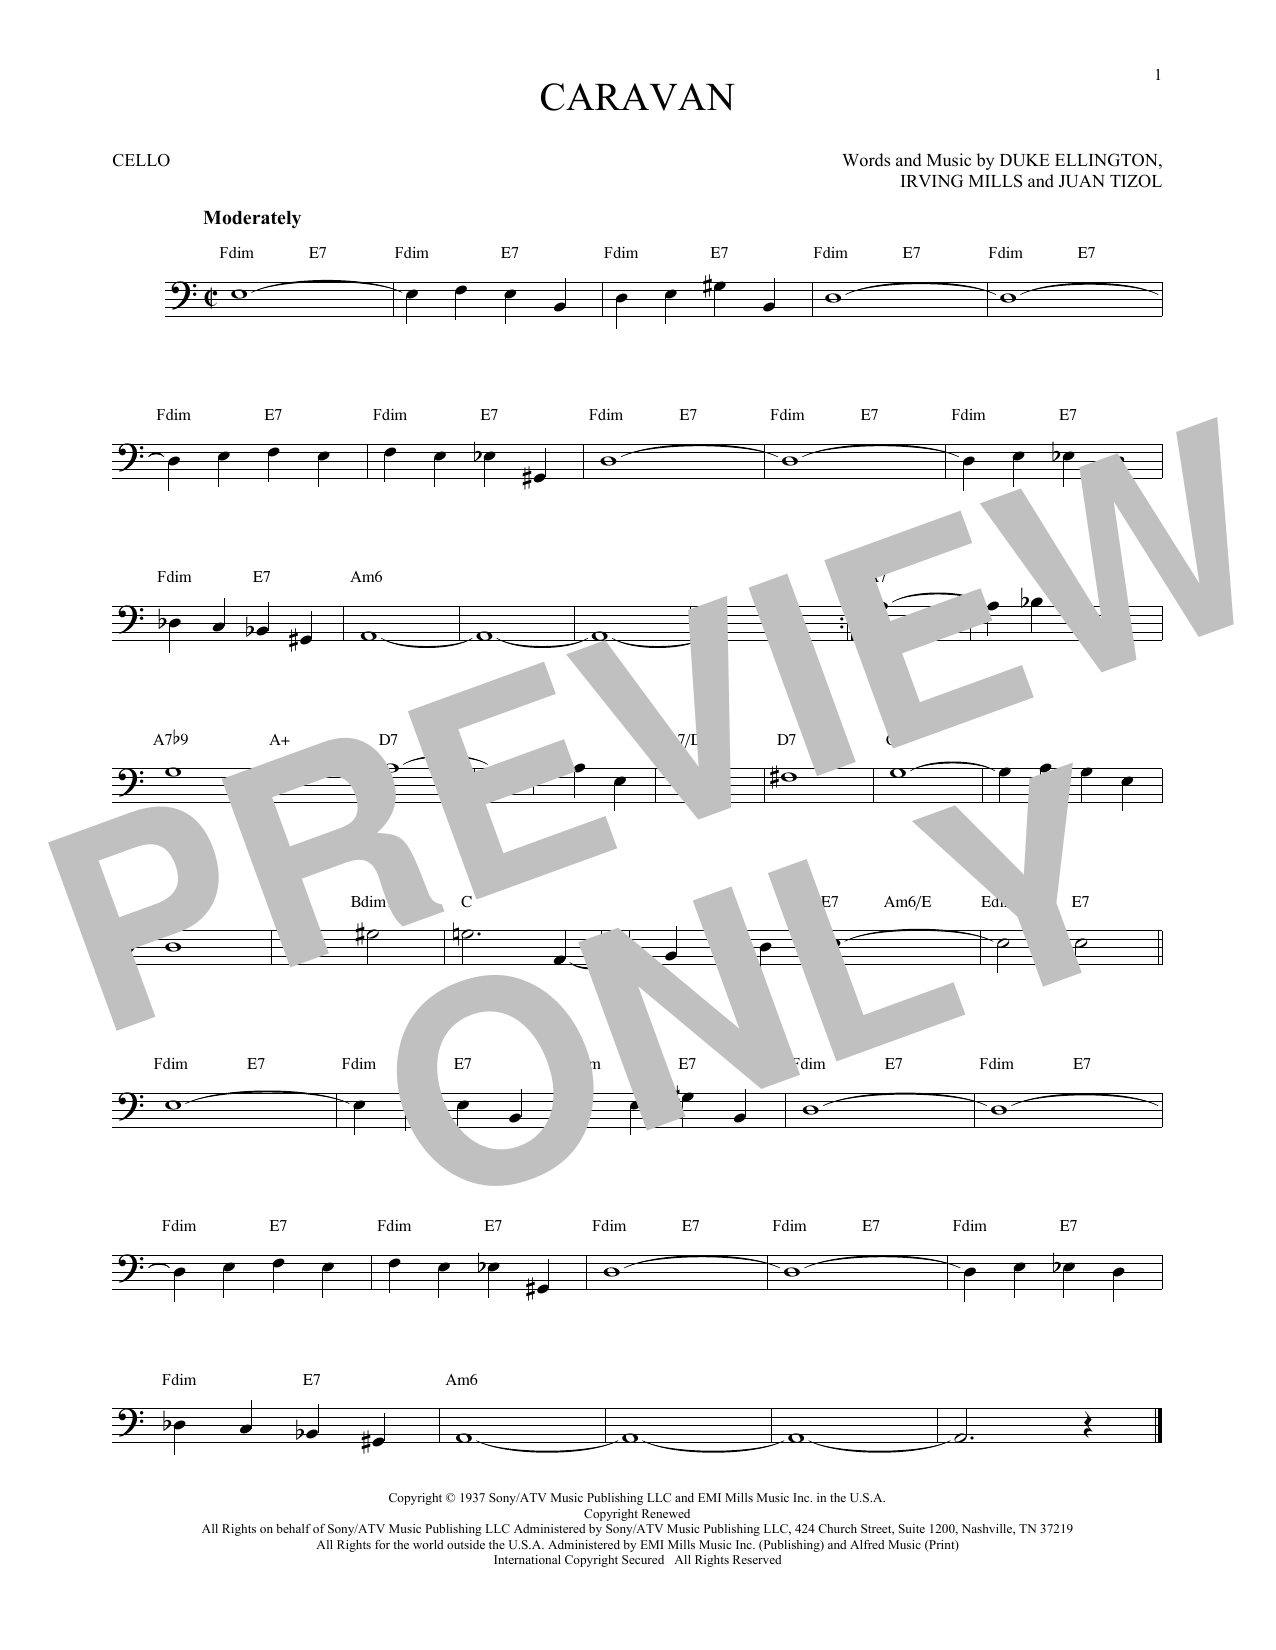 Download Juan Tizol & Duke Ellington Caravan Sheet Music and learn how to play Tenor Saxophone PDF digital score in minutes